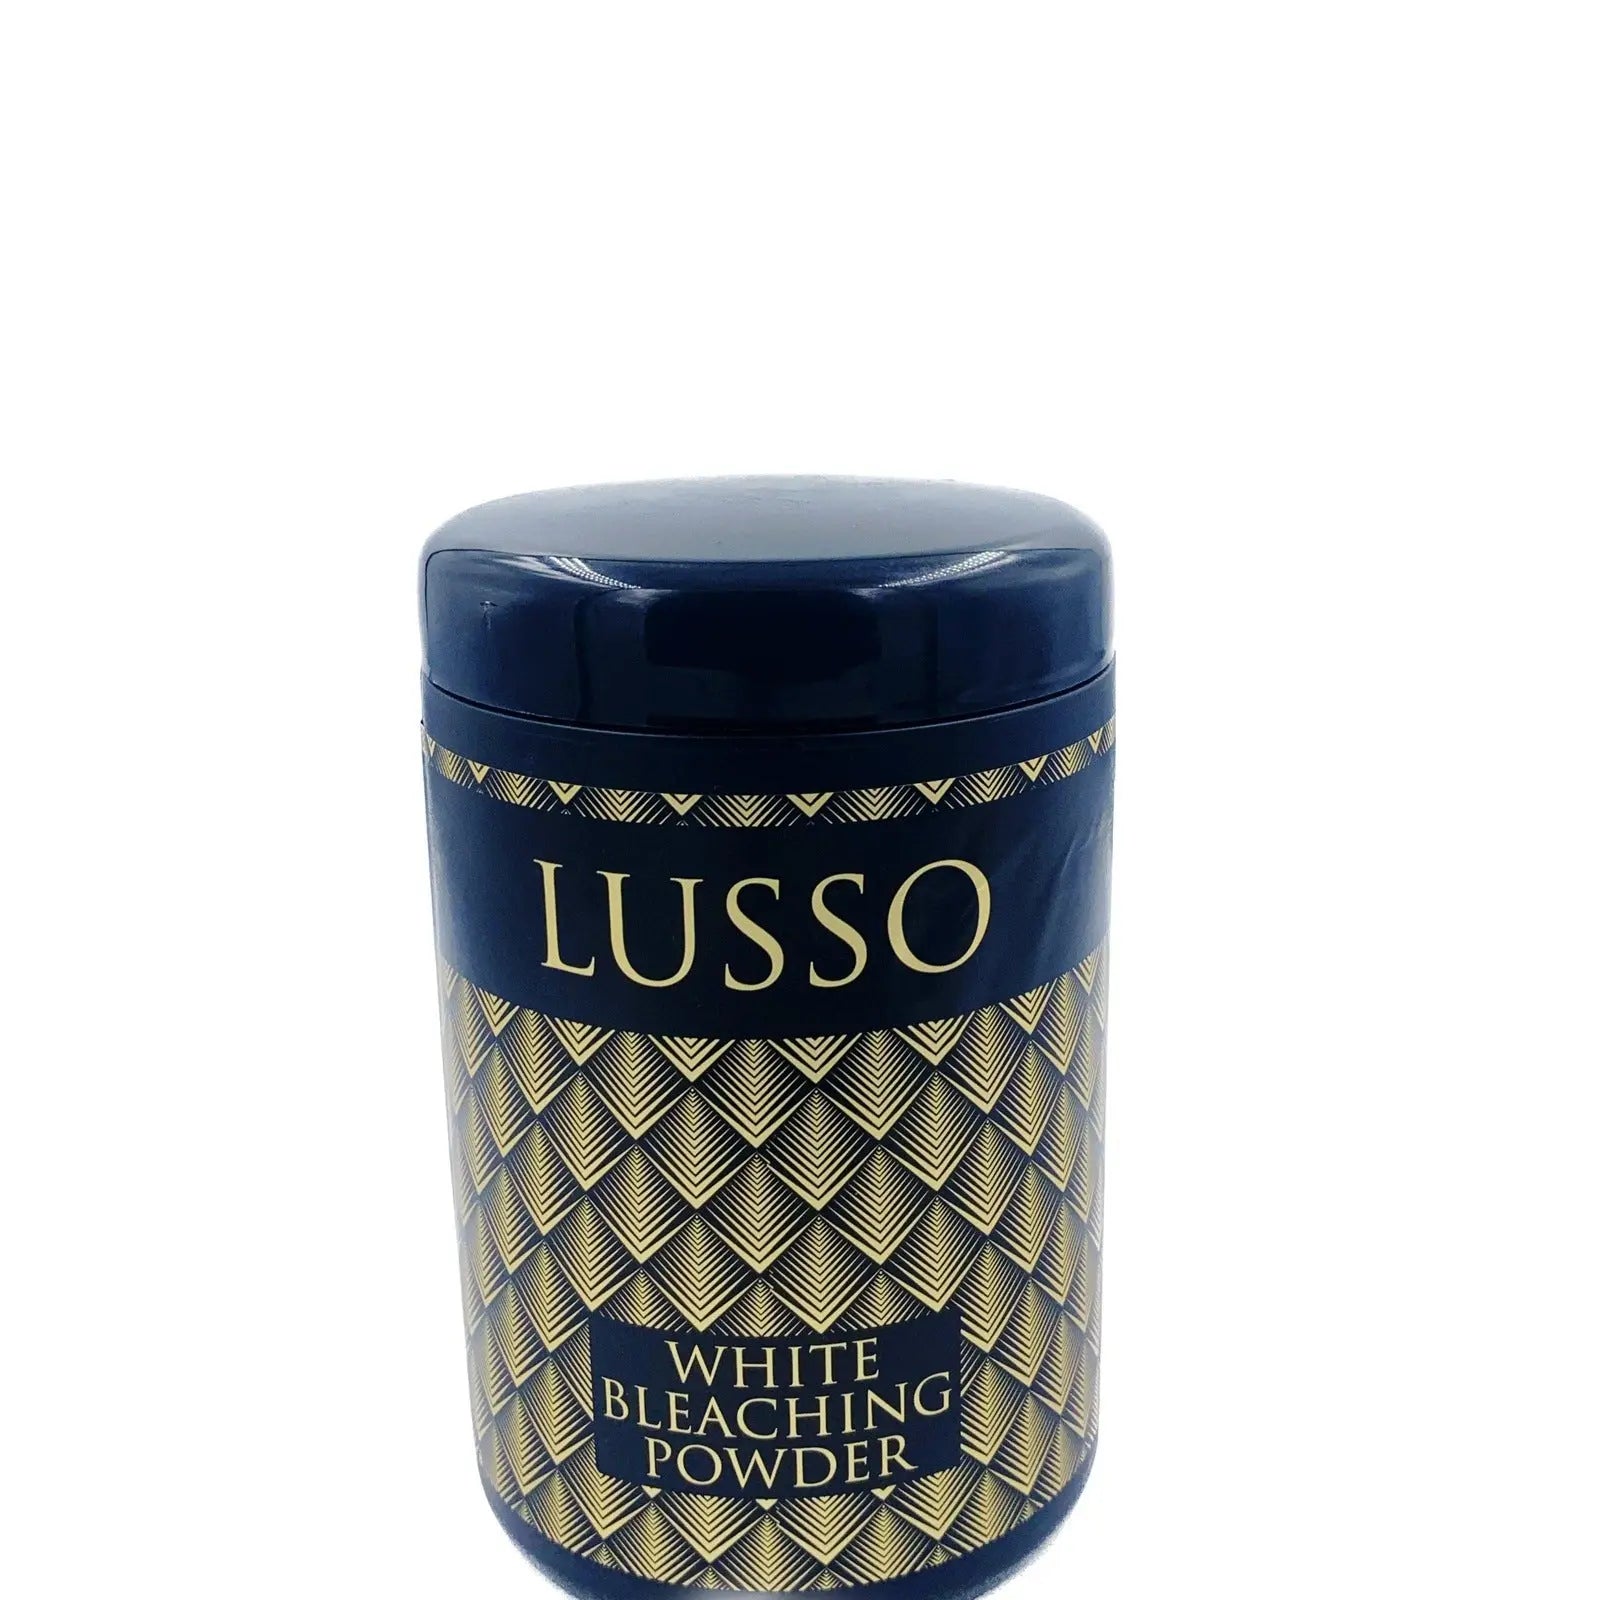 LUSSO Bleaching Powder 500 g - JOLIE'S UAE